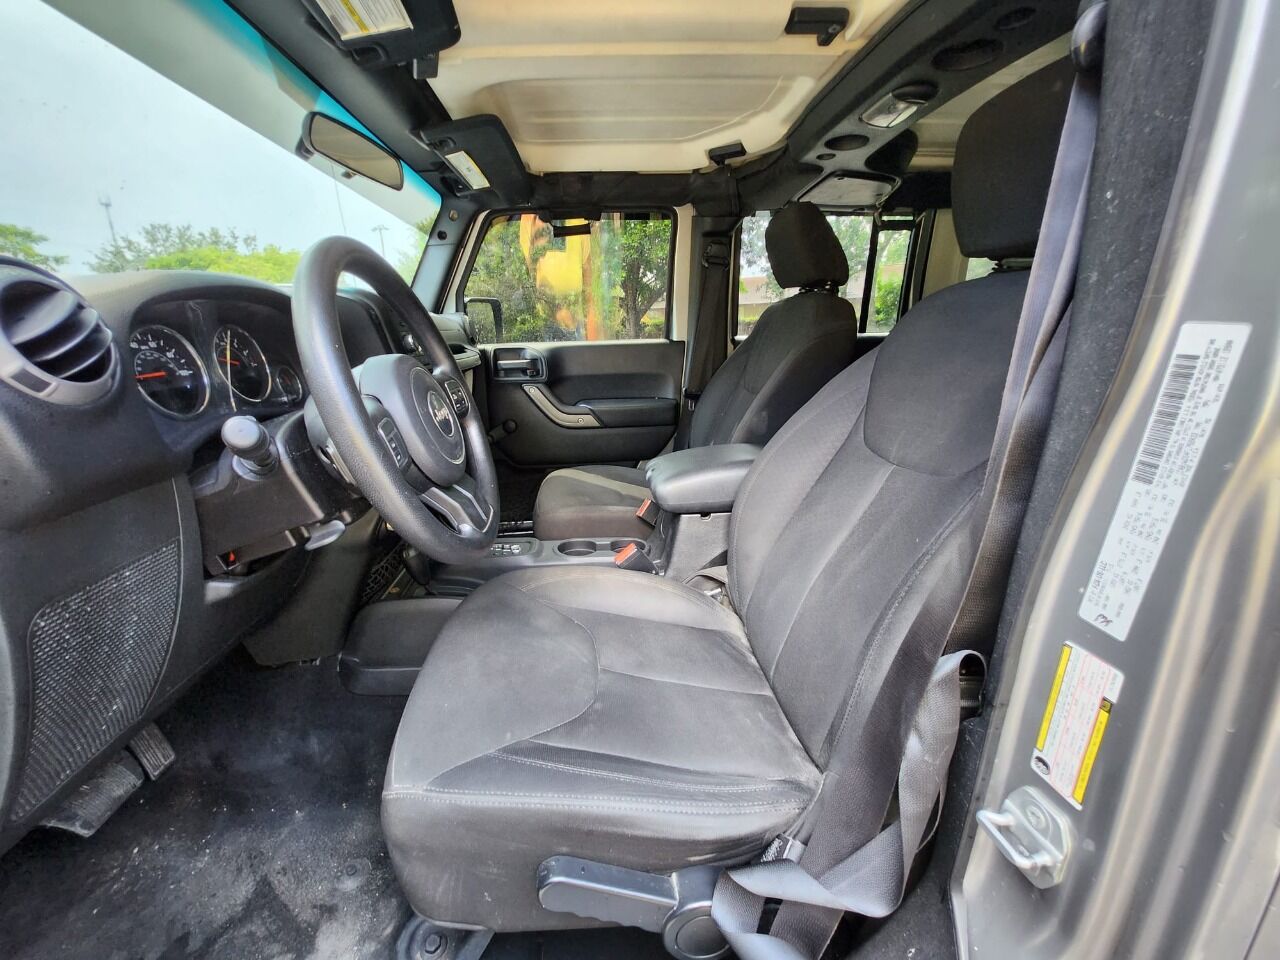 2015 Jeep Wrangler SUV / Crossover - $18,995